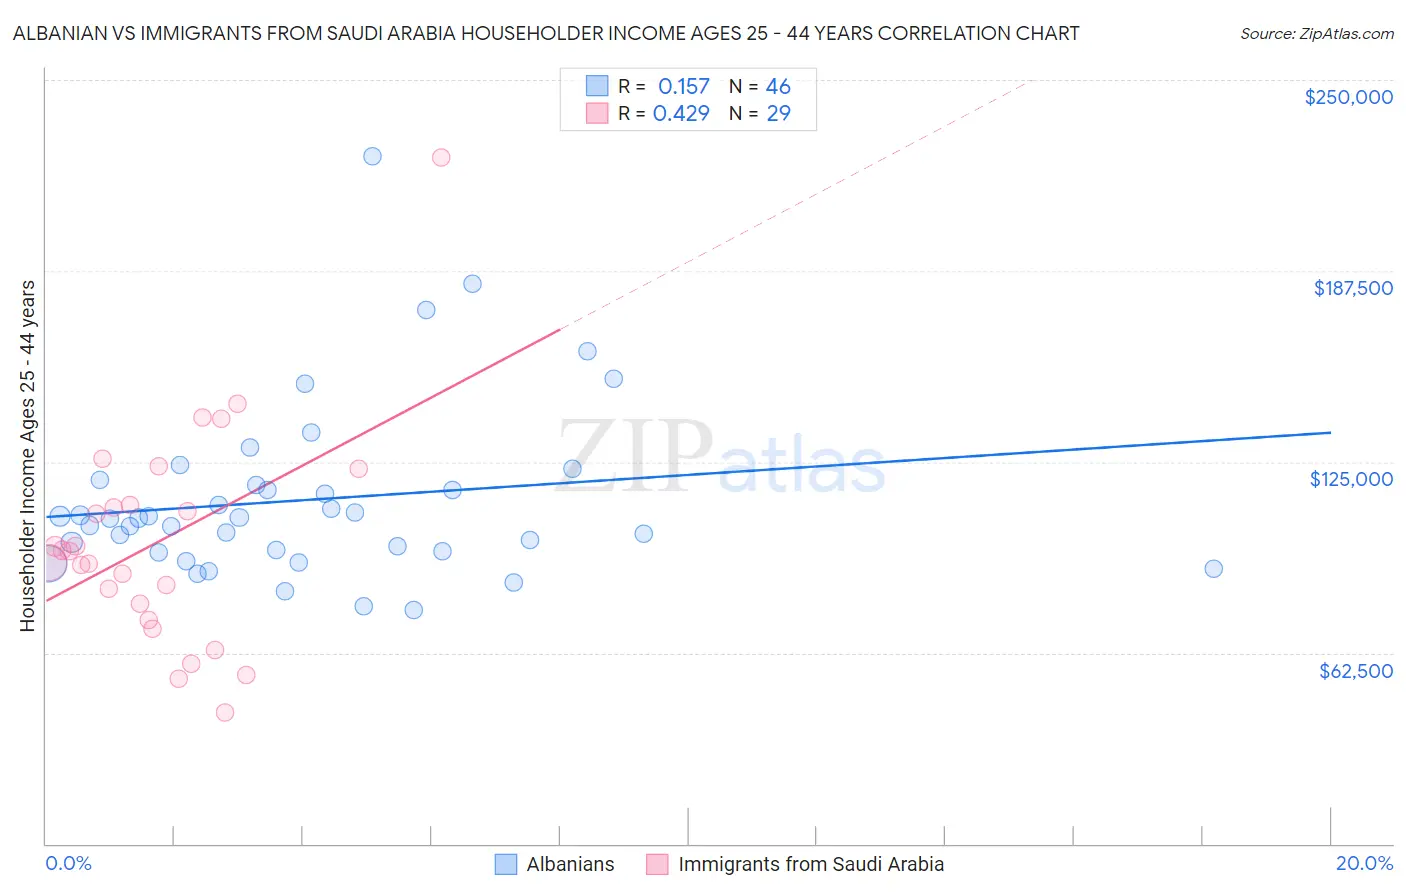 Albanian vs Immigrants from Saudi Arabia Householder Income Ages 25 - 44 years